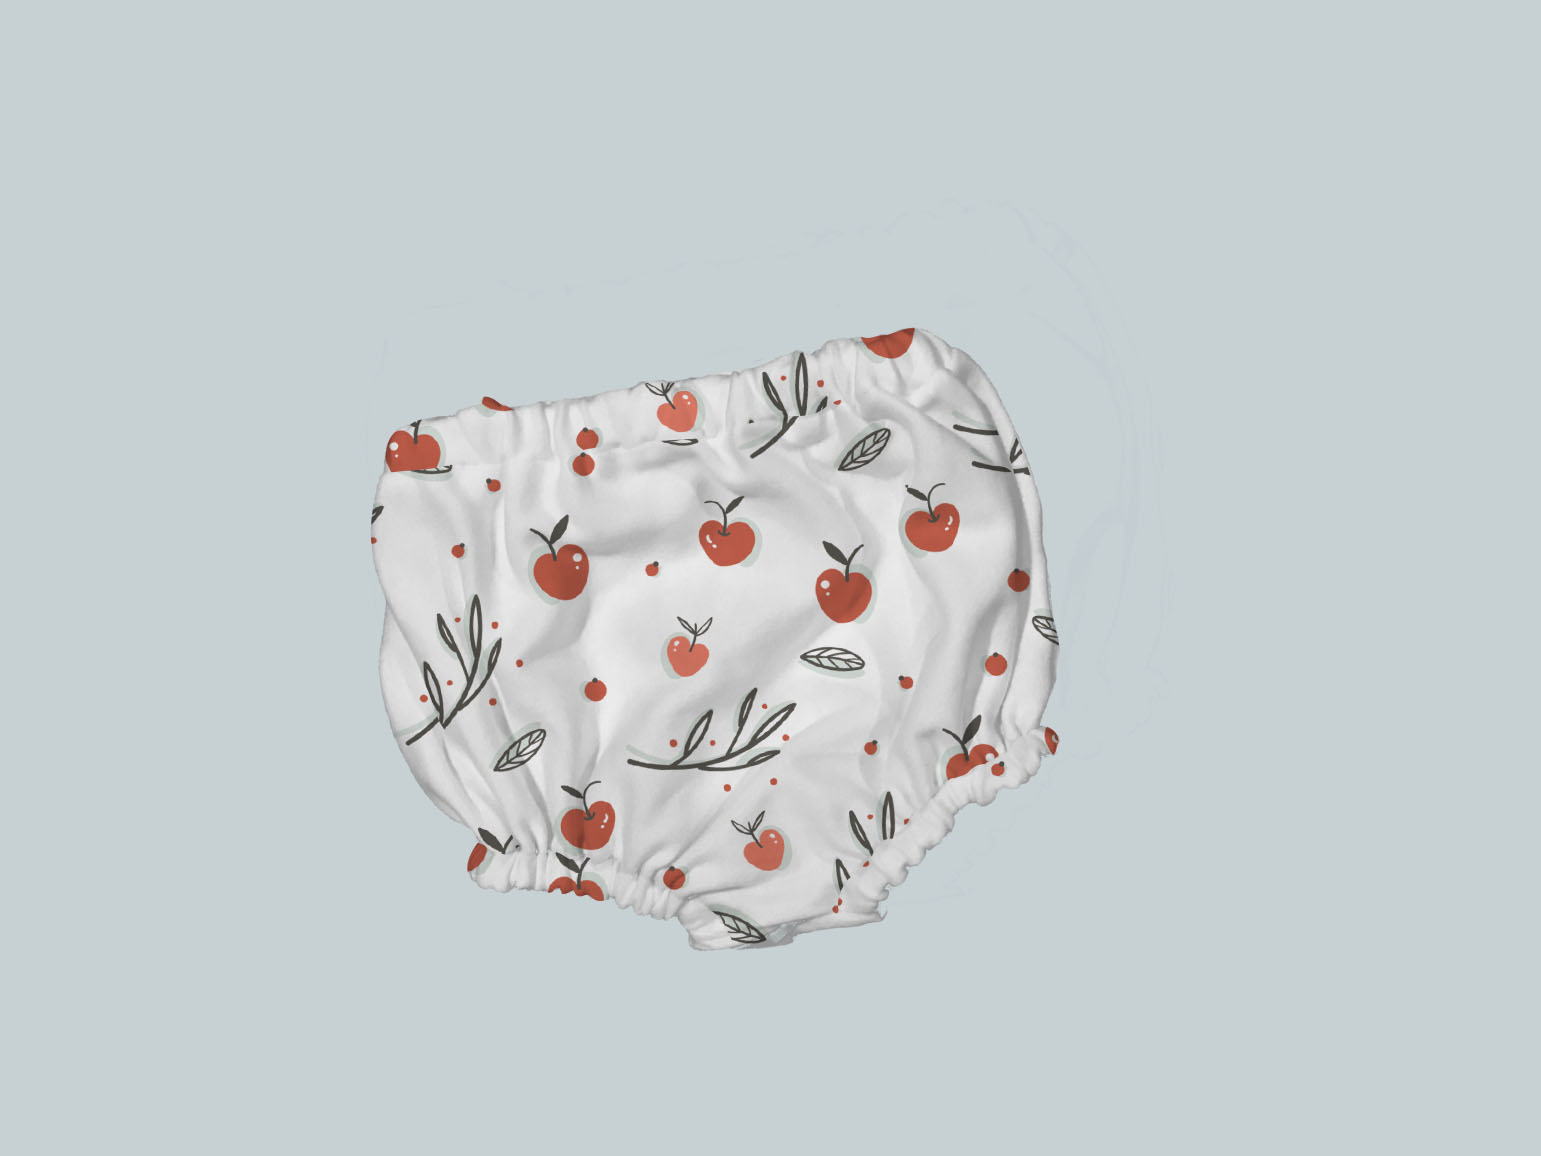 Bummies/Diaper Cover - Cheery Cherry